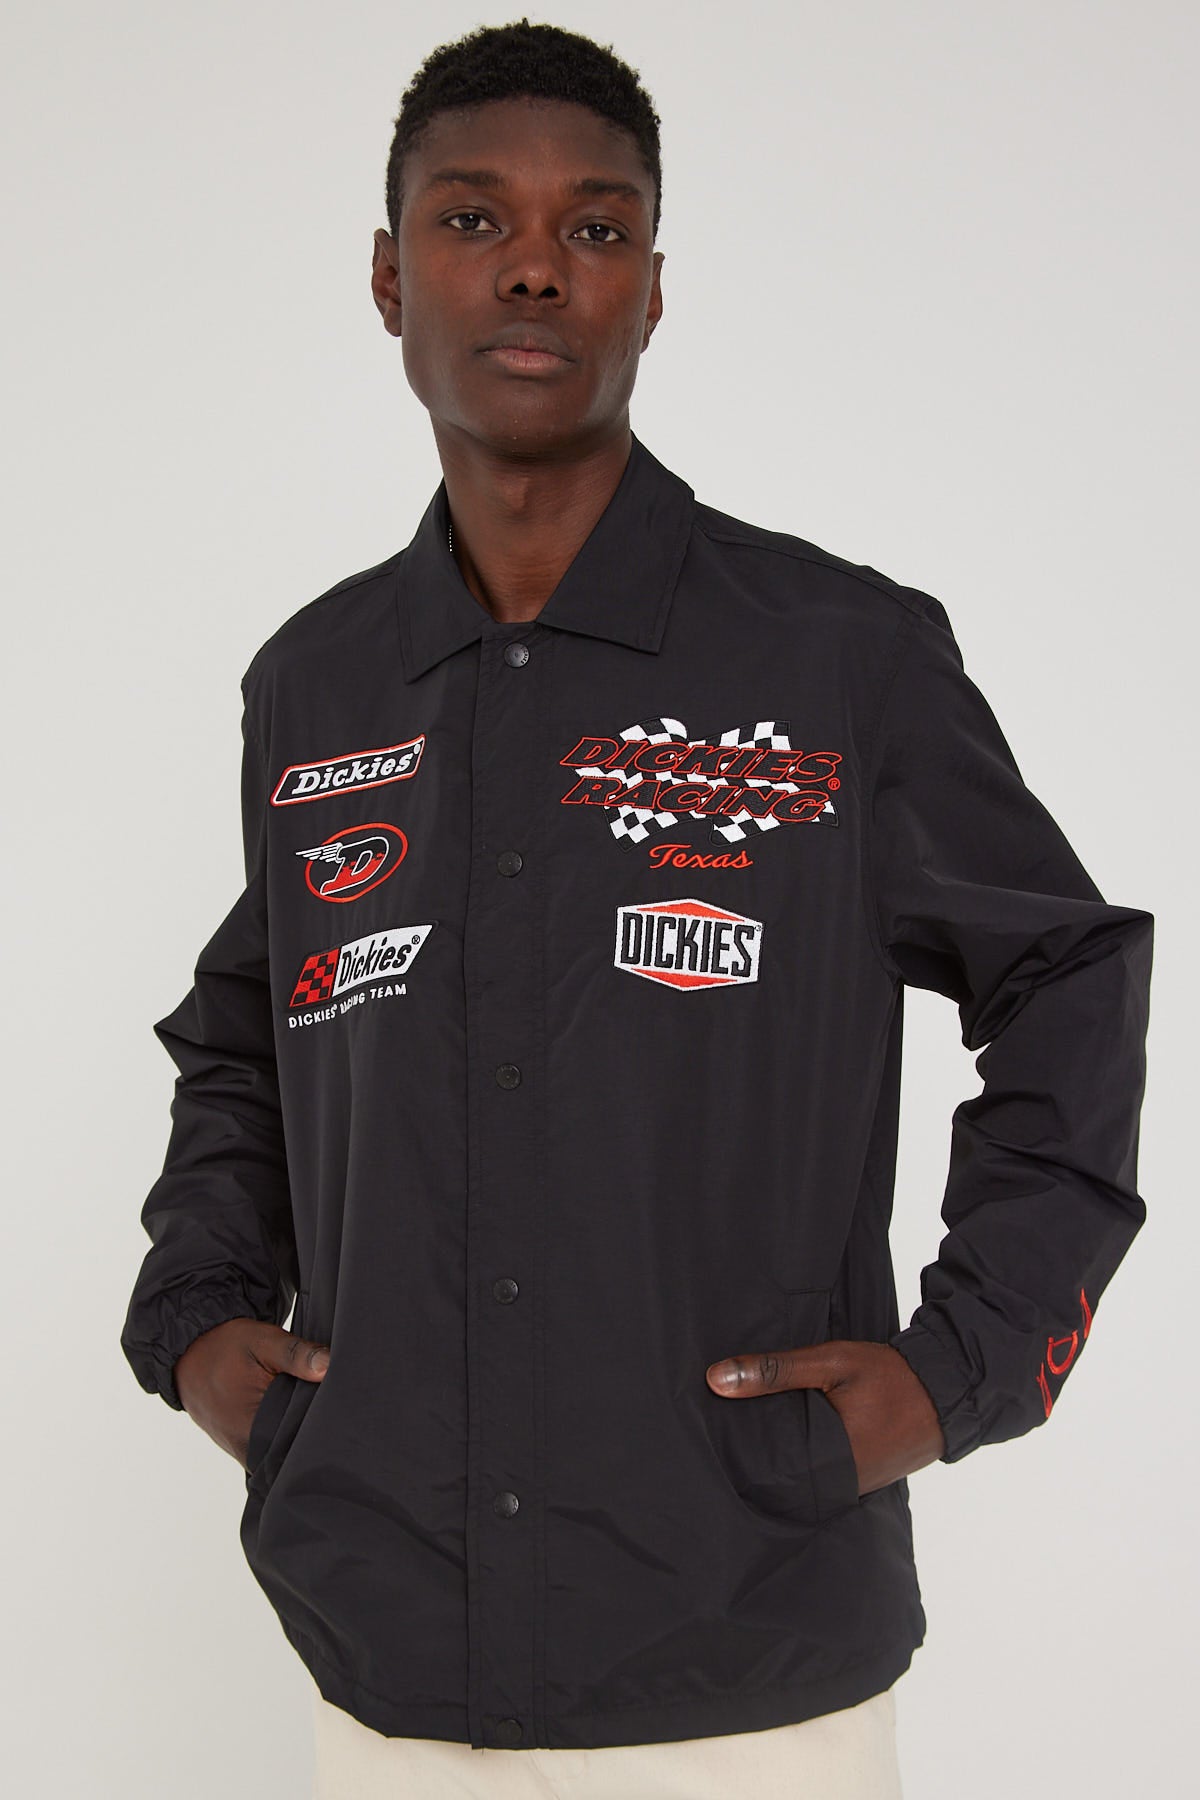 Dickies Speed Demon Coaches Jacket Black